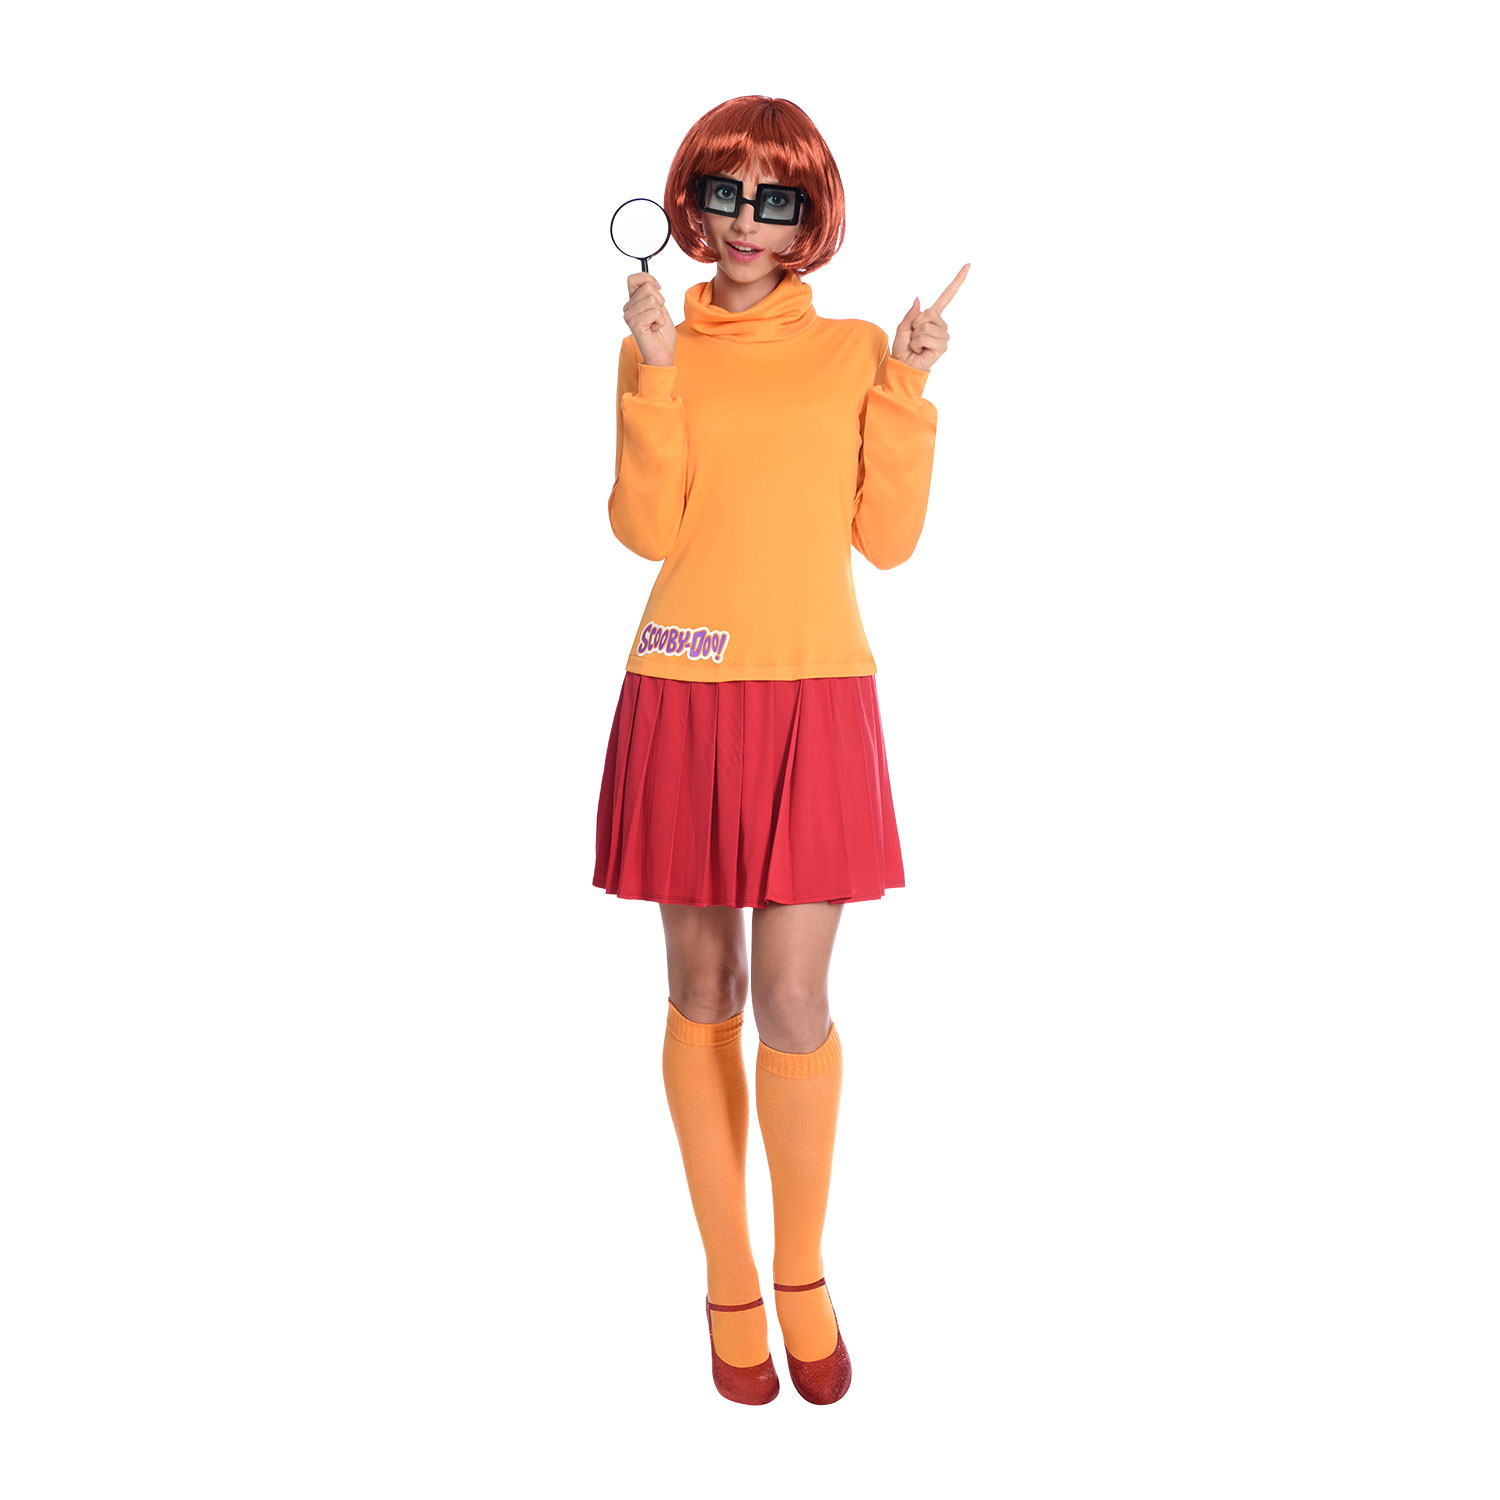 Velma Costume - Size 12-14 - 1 PC : Amscan International